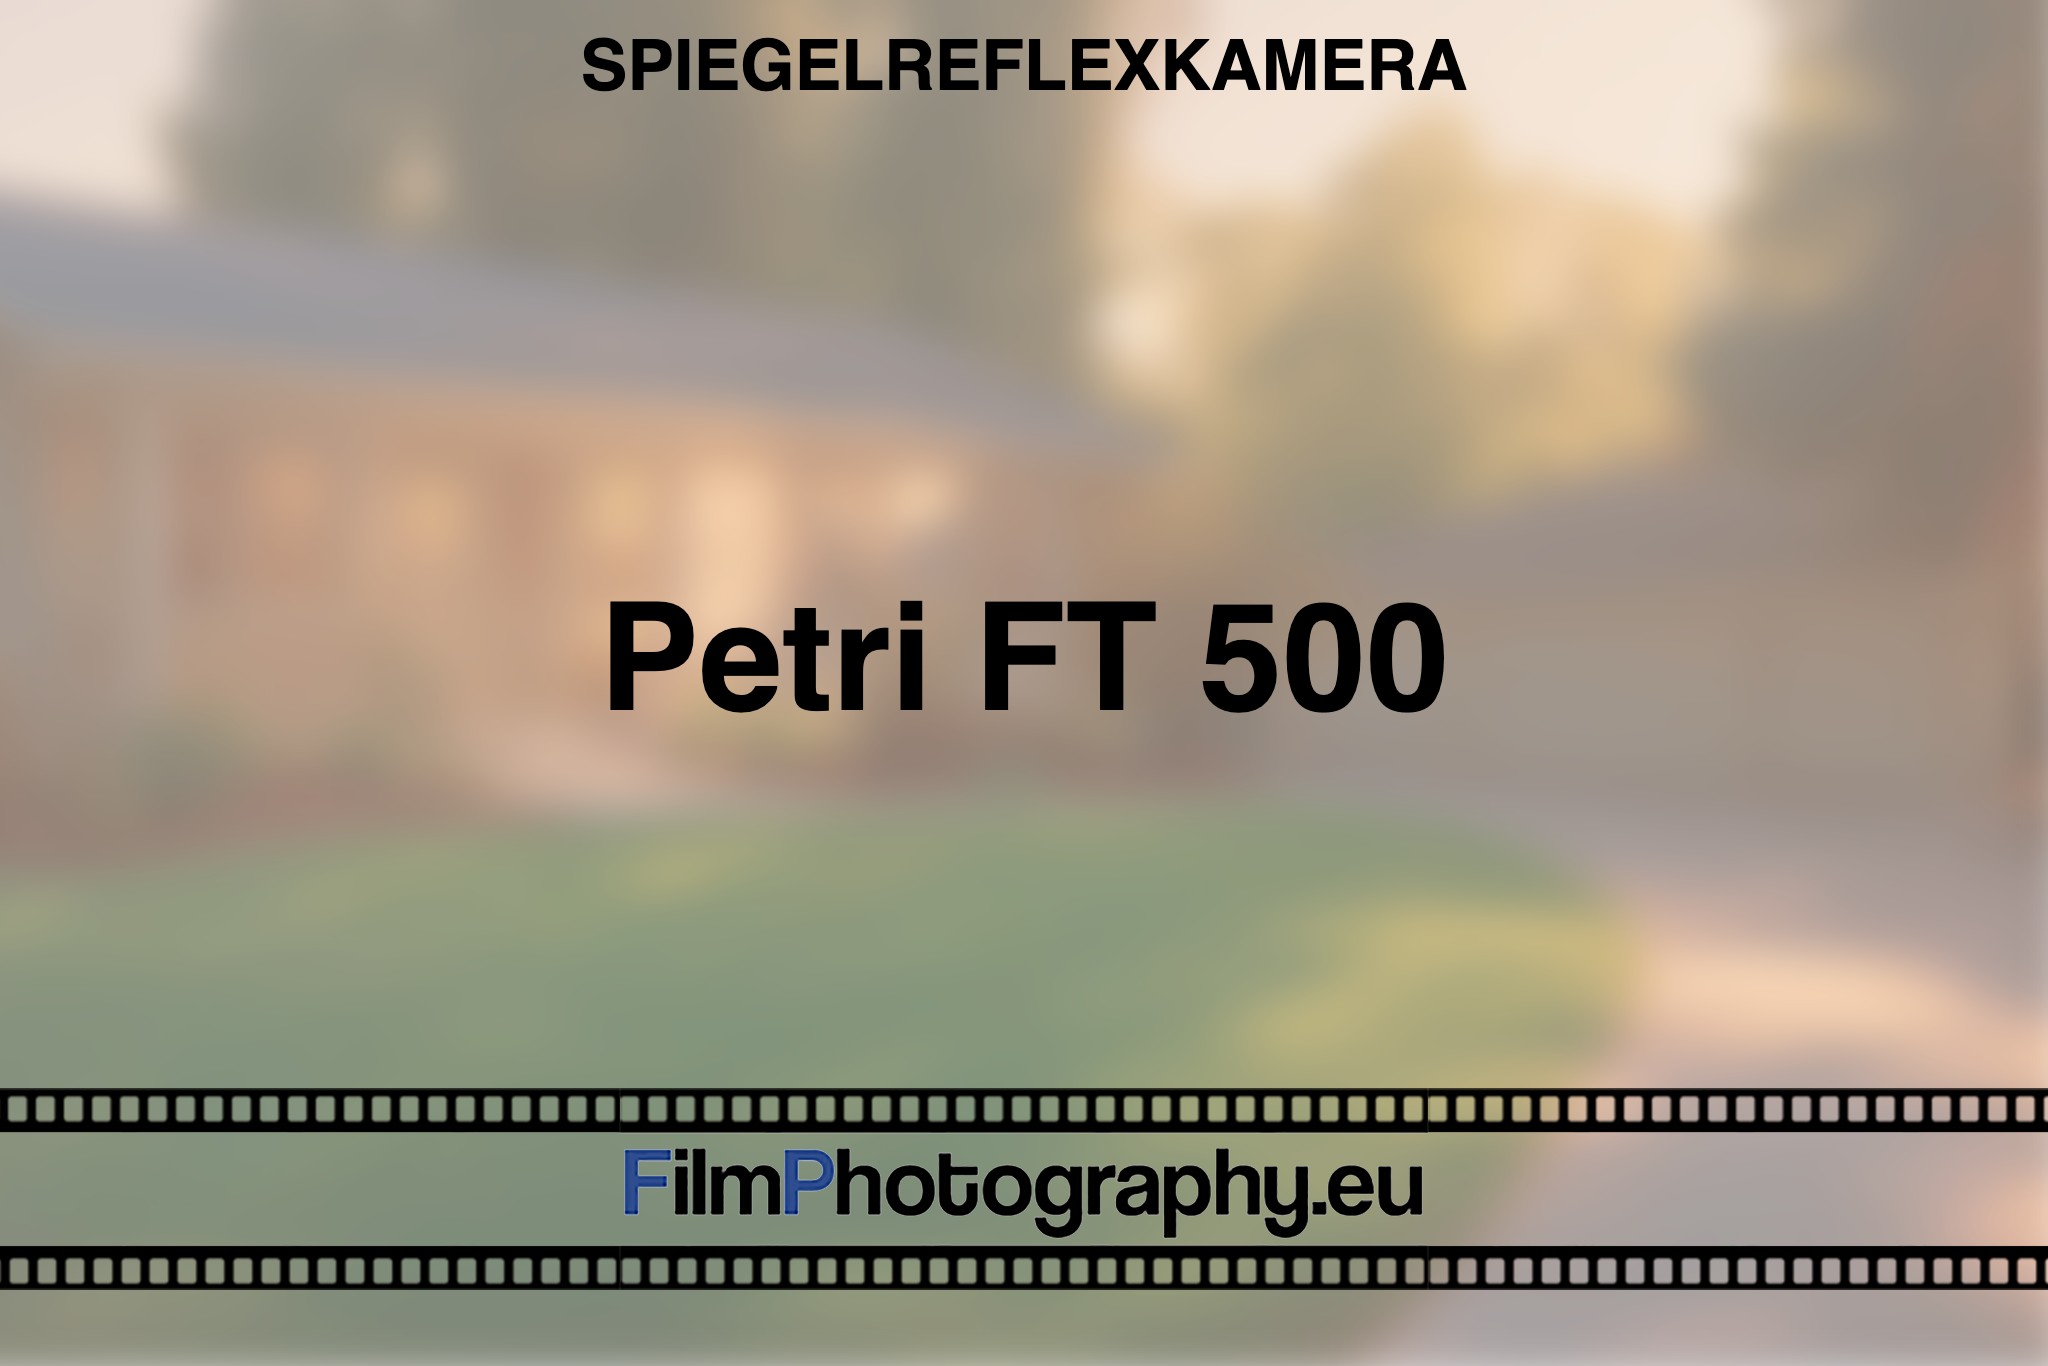 petri-ft-500-spiegelreflexkamera-bnv